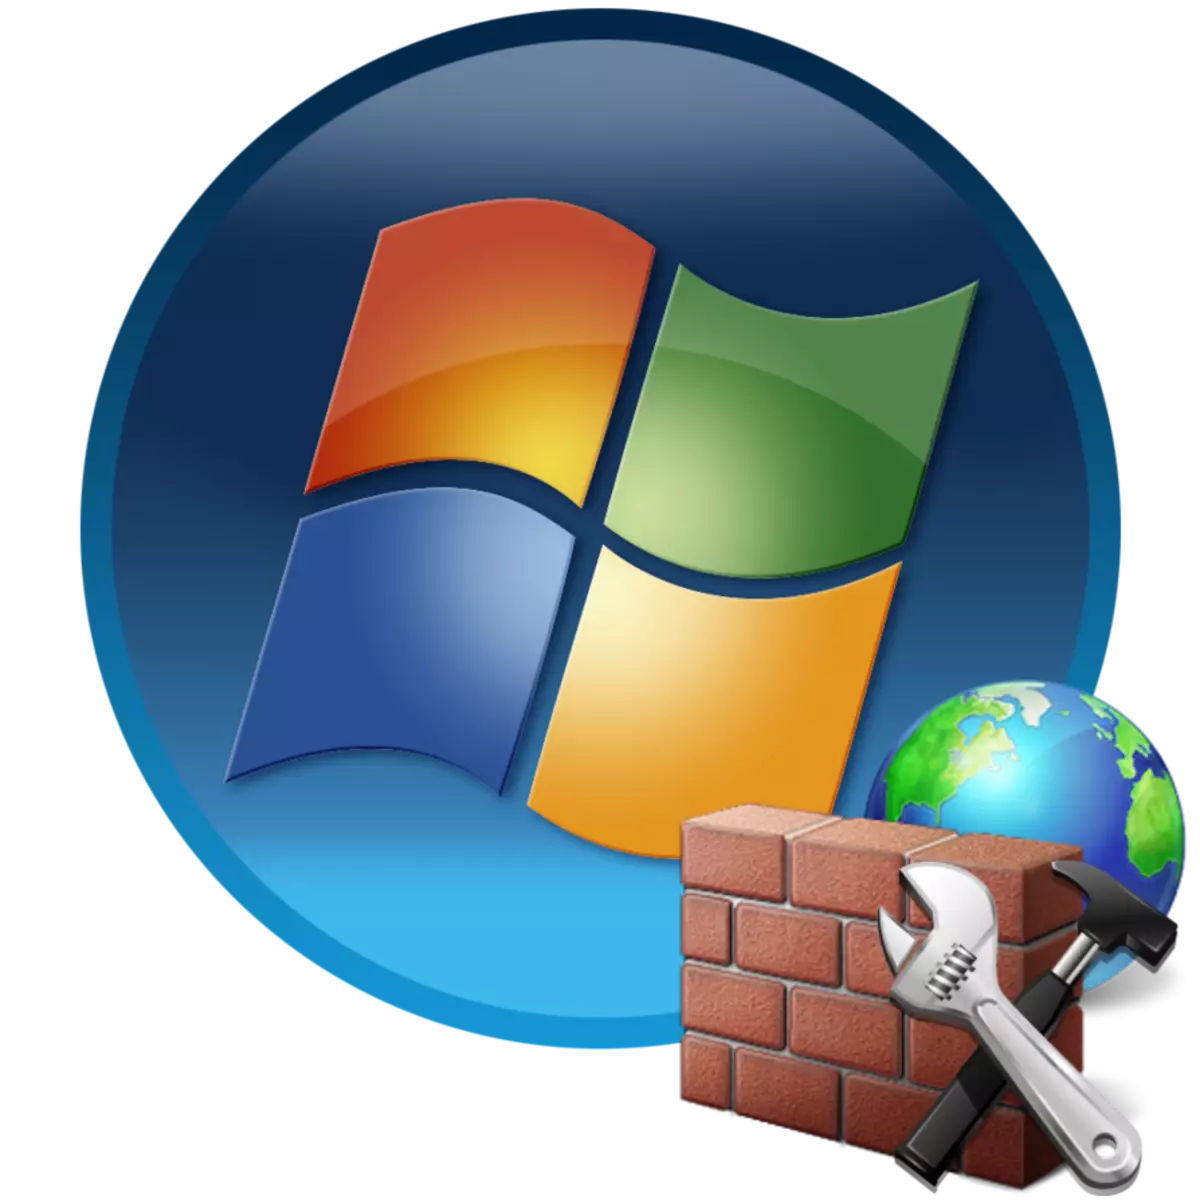 Skonfiguruj firewall w systemie Windows 7